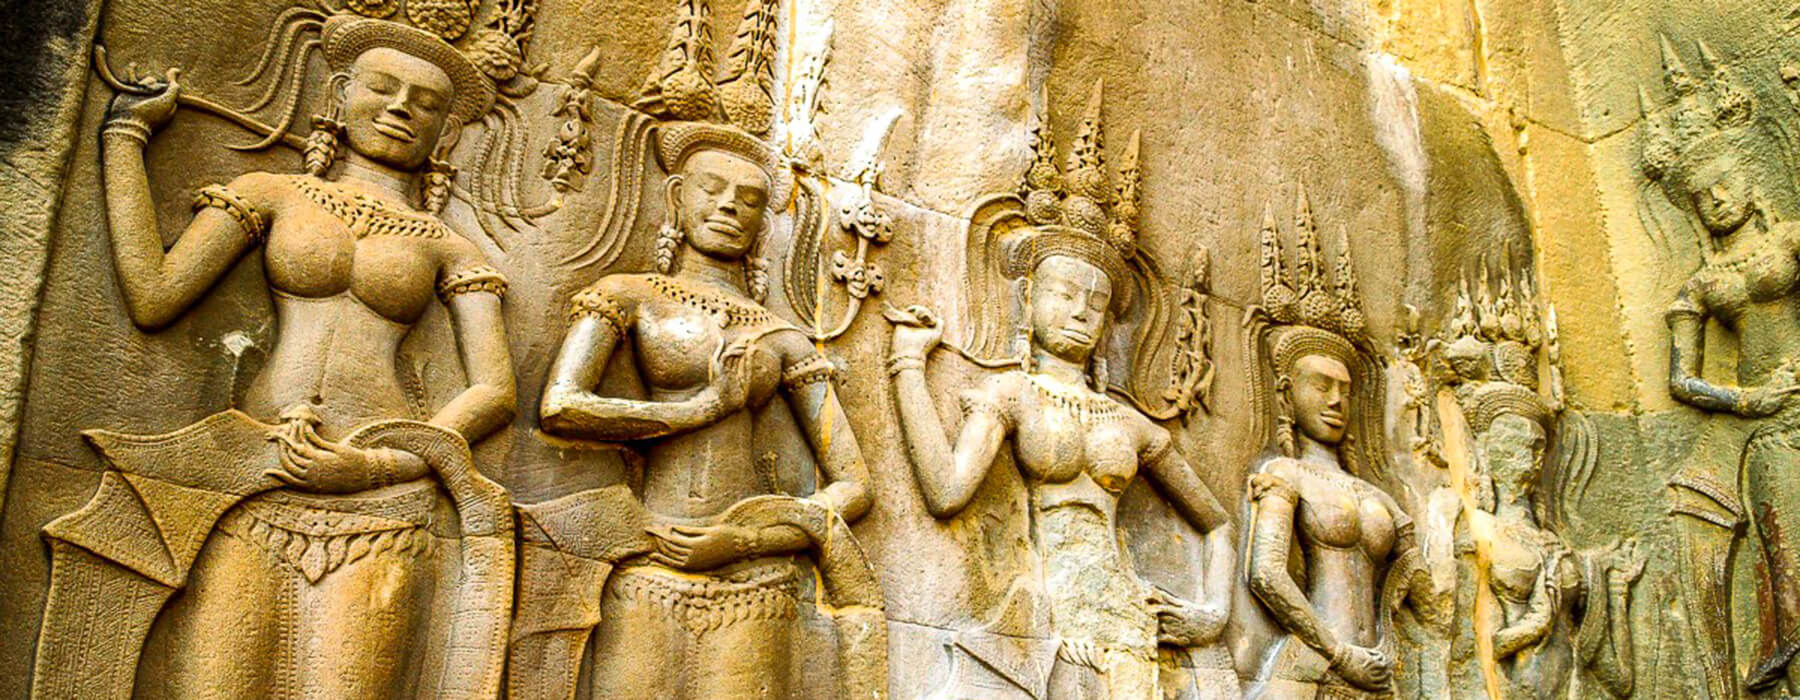 Cambodia history tour